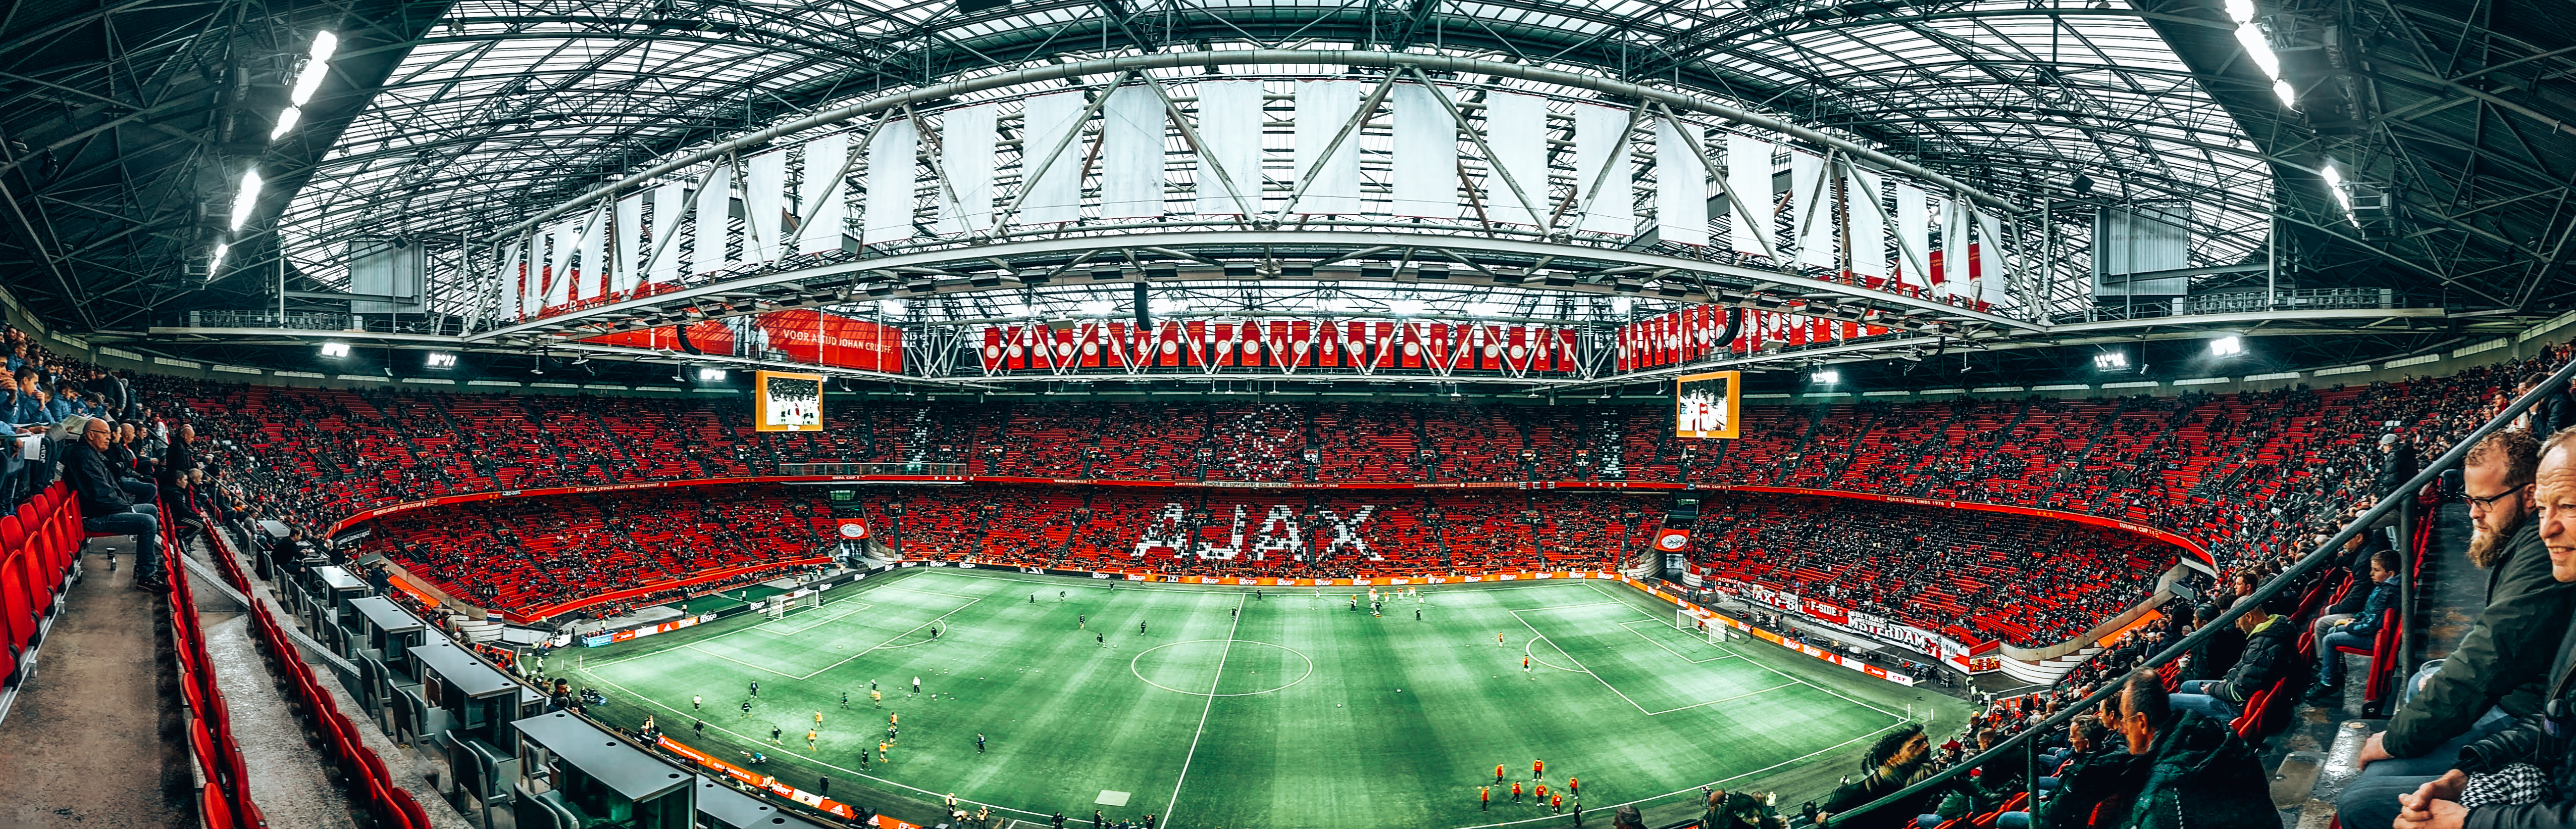 Johan Cruyff Arena home of the Amsterdam Ajax football club